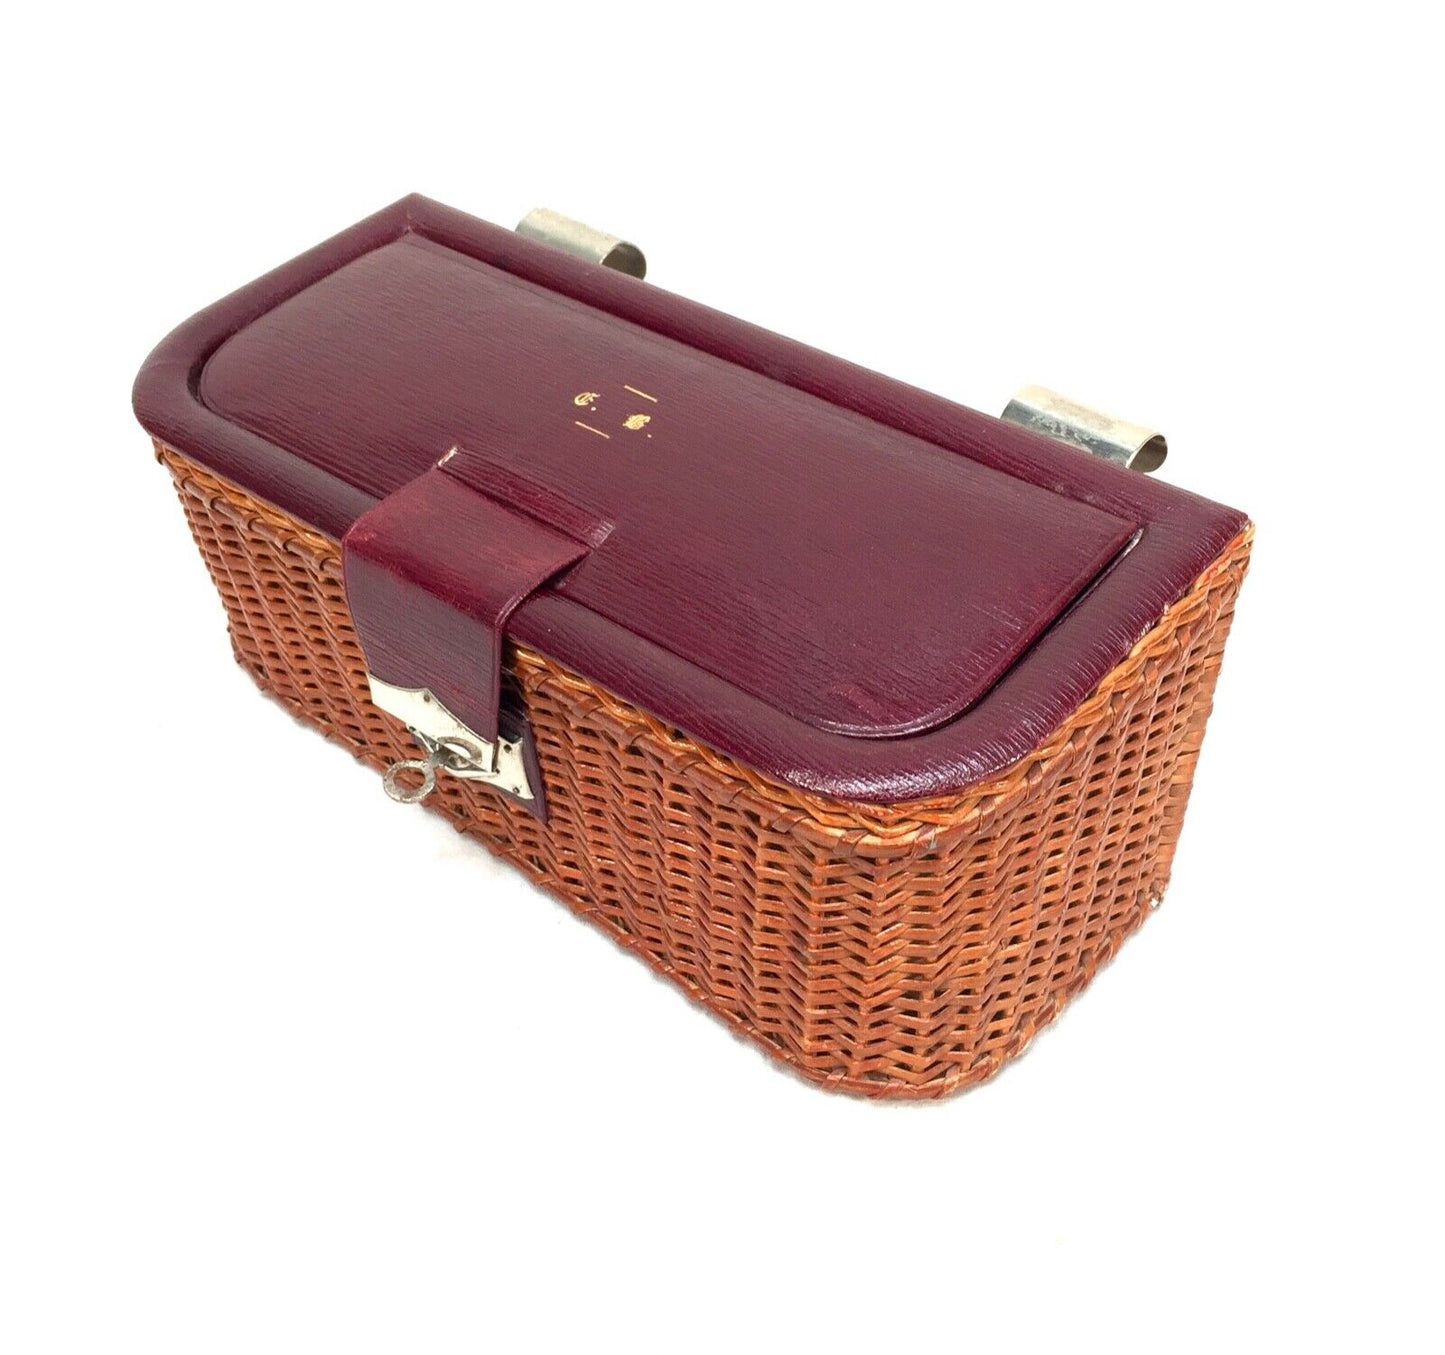 Antique Messenger Red Leather Bound Stationery Box & Wicker Basket Design c.1910